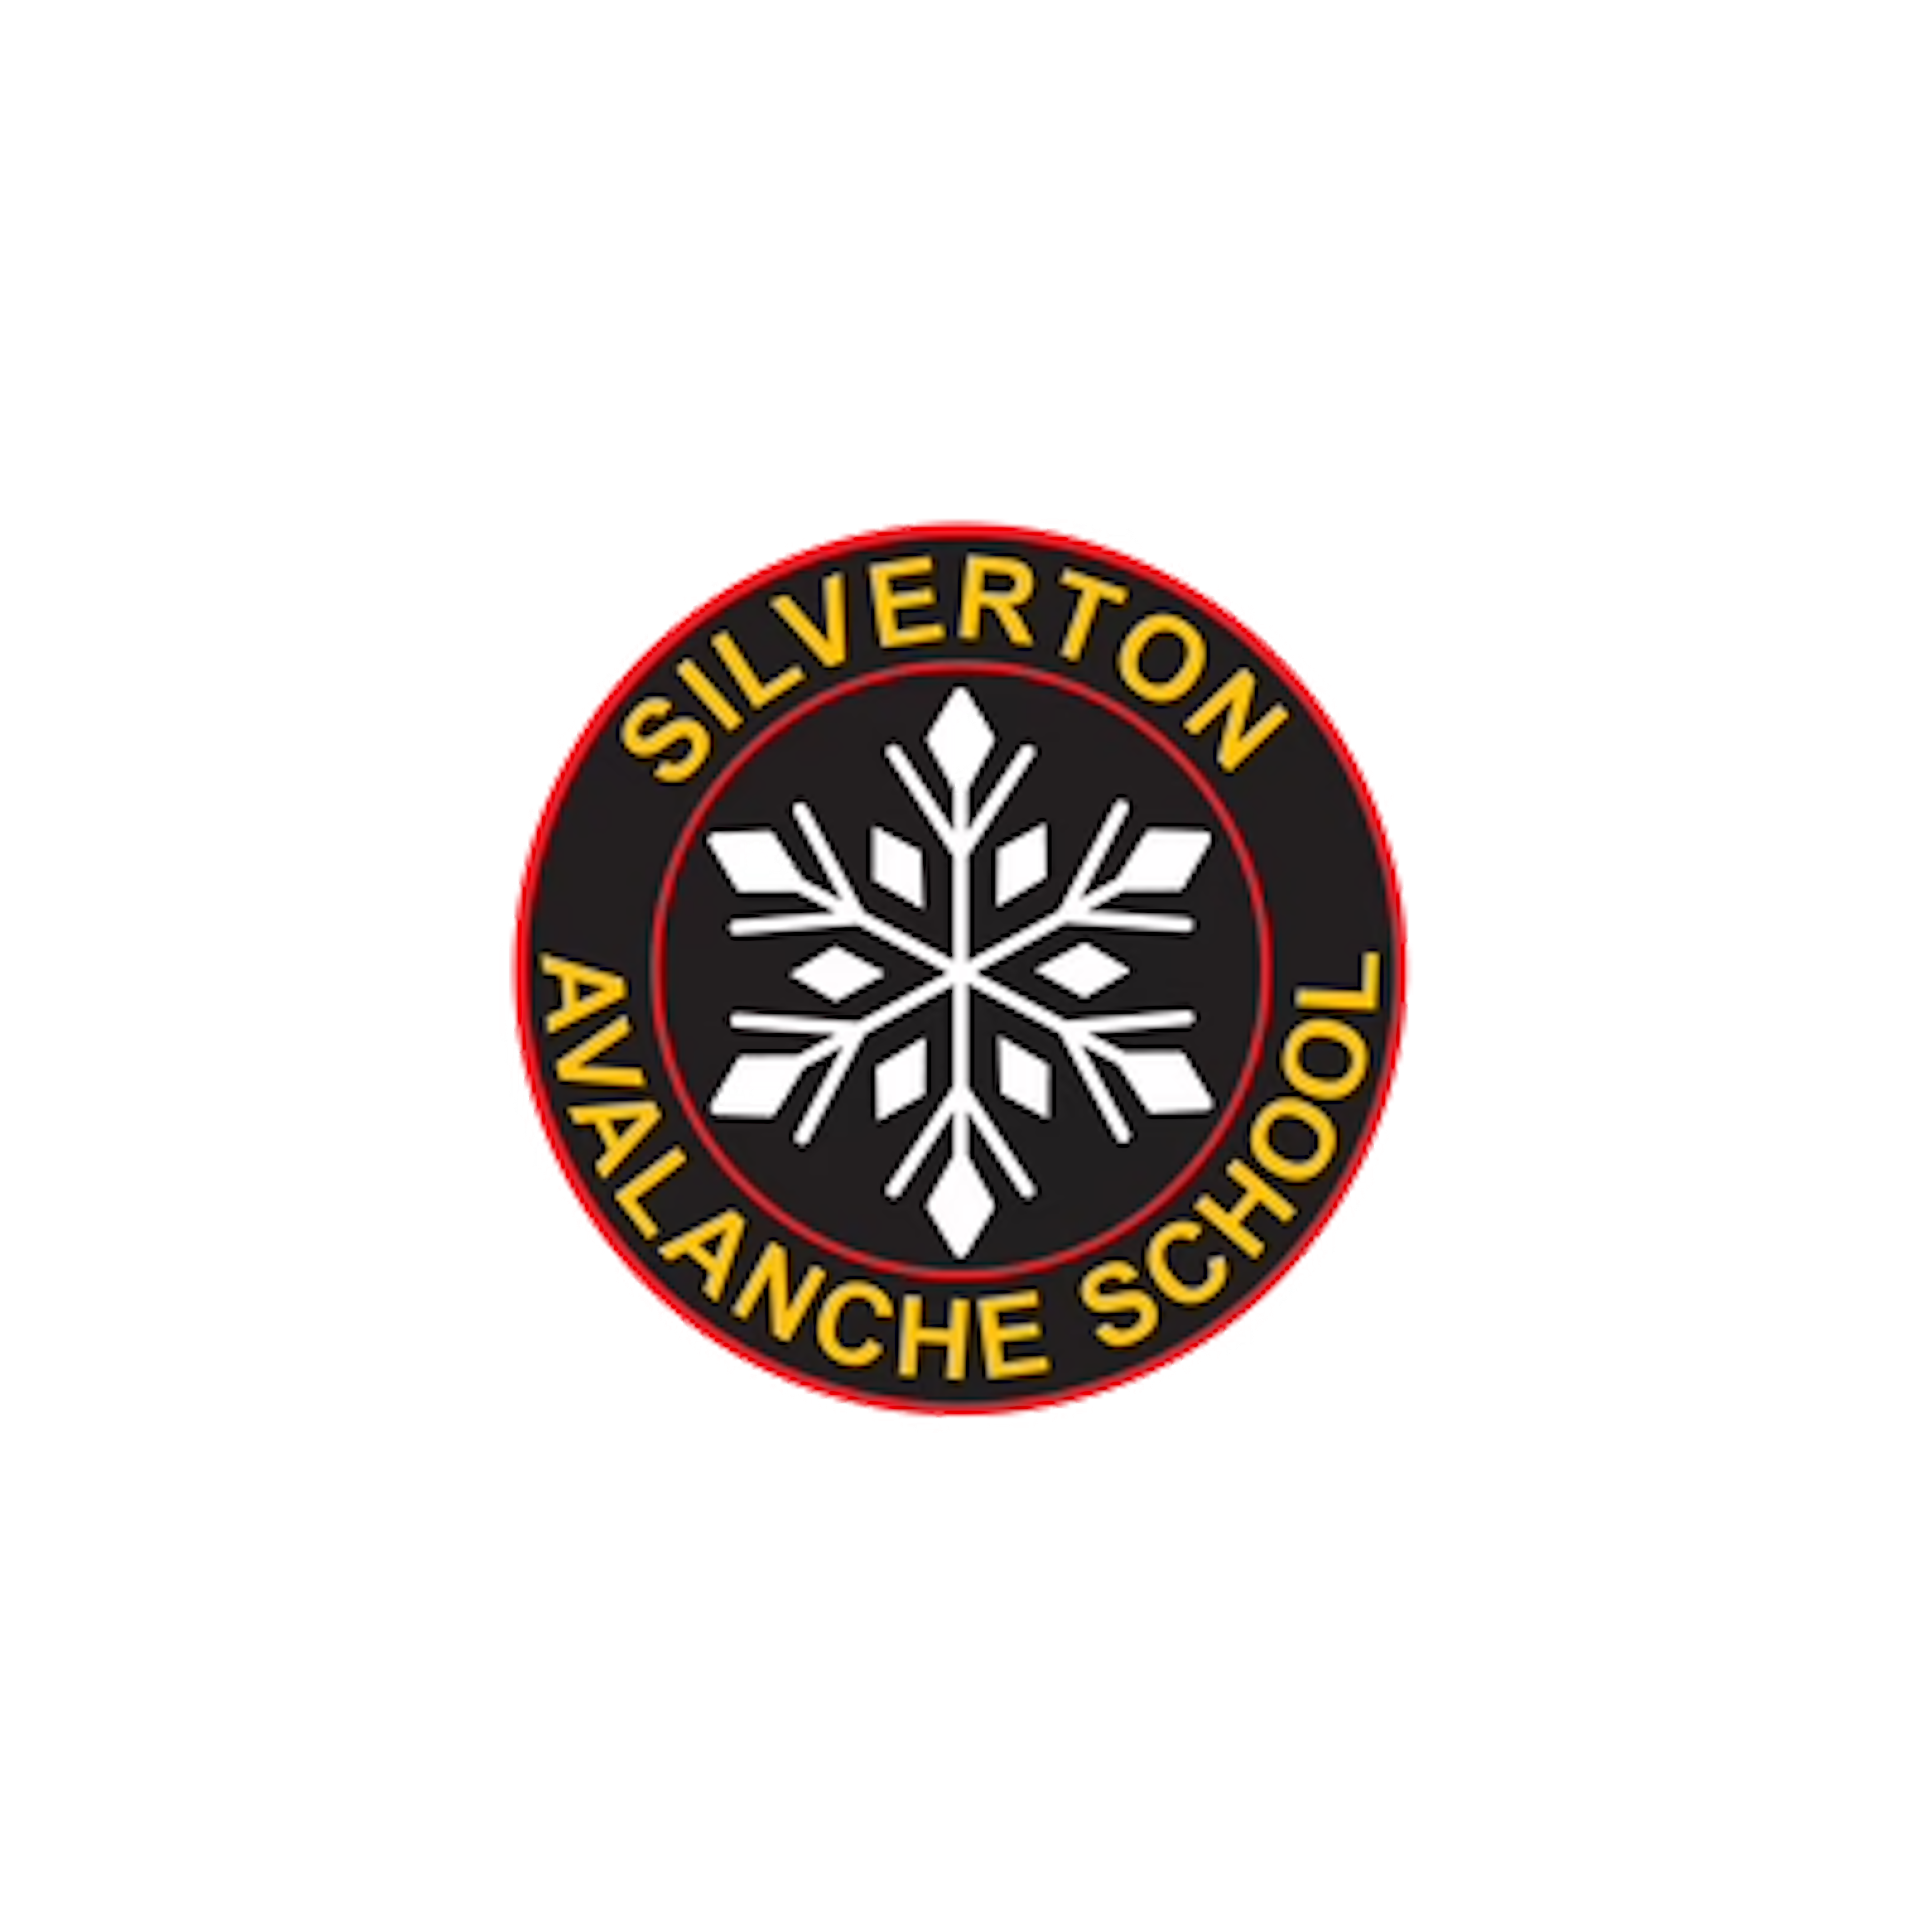 silverton avalanche school